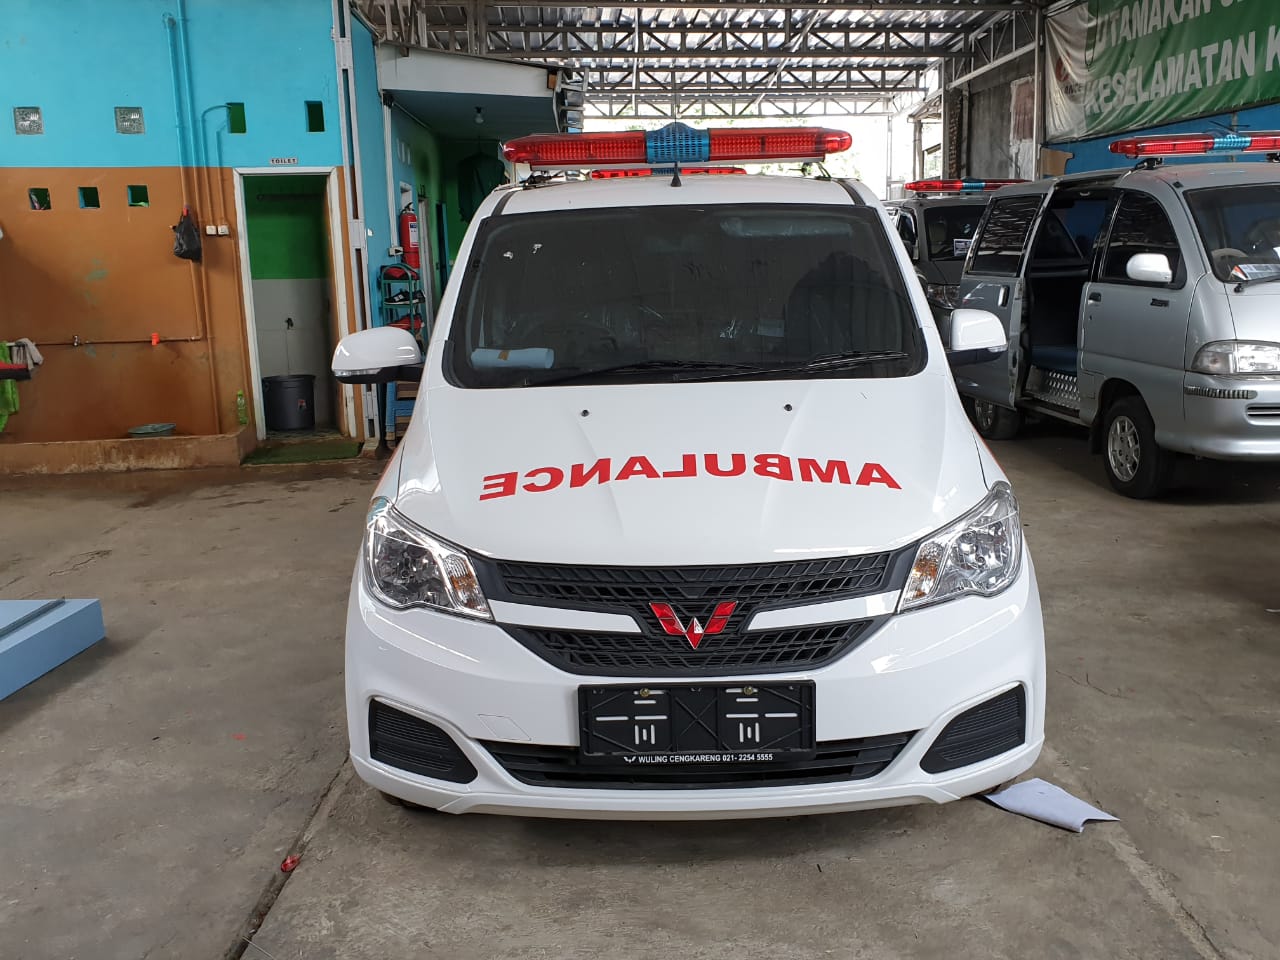 Modifikasi Mobil Ambulan